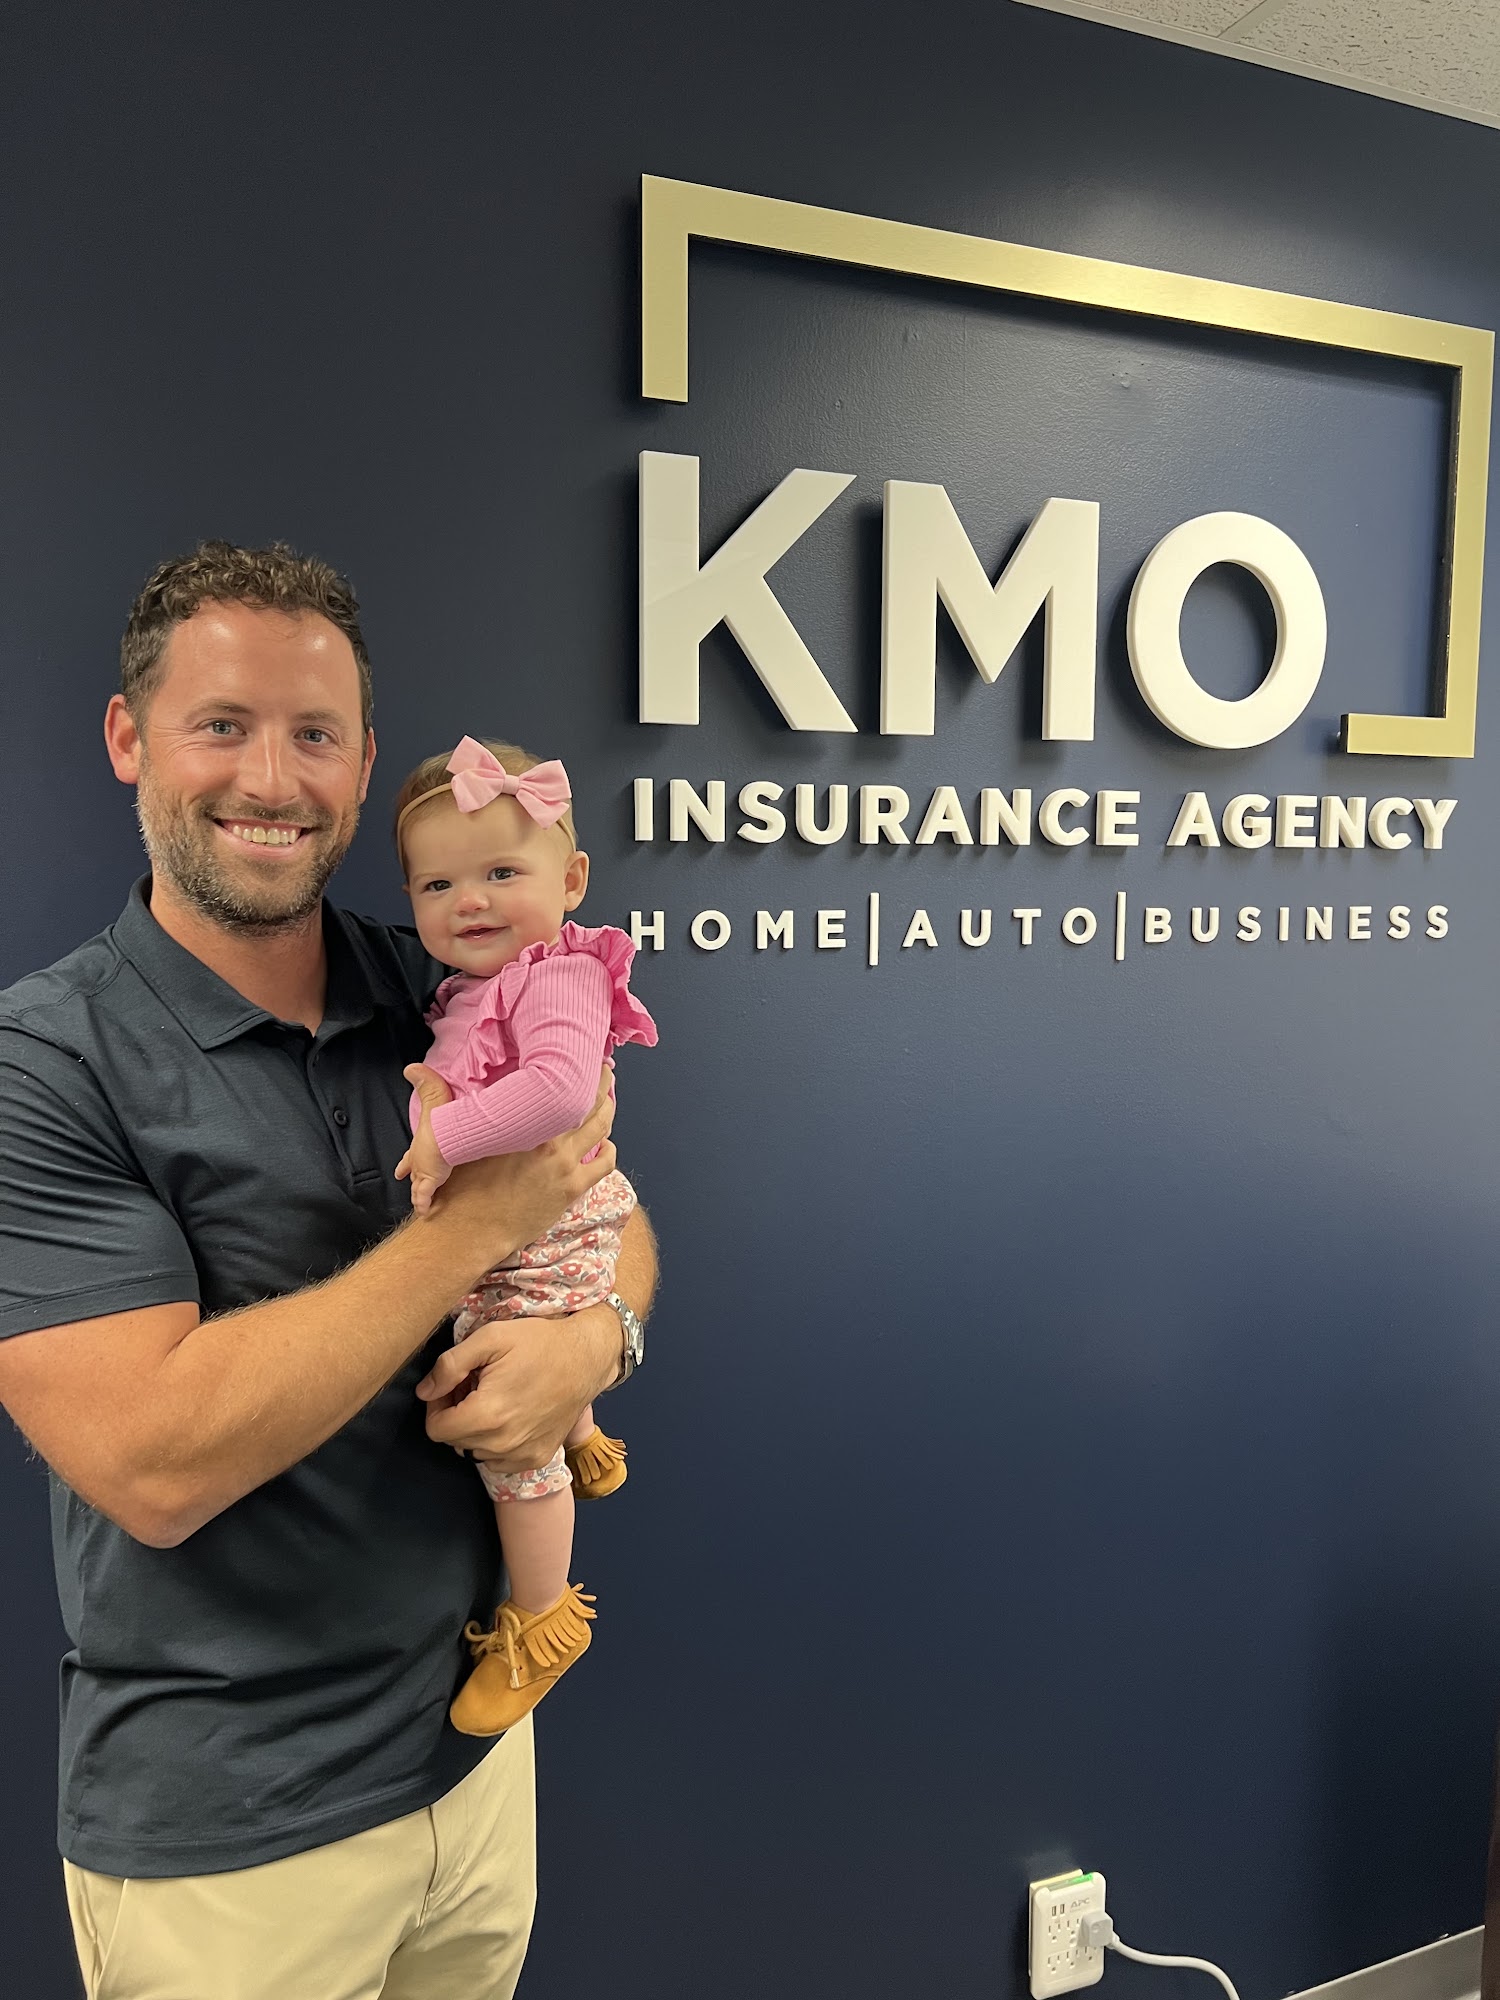 KMO Insurance Agency